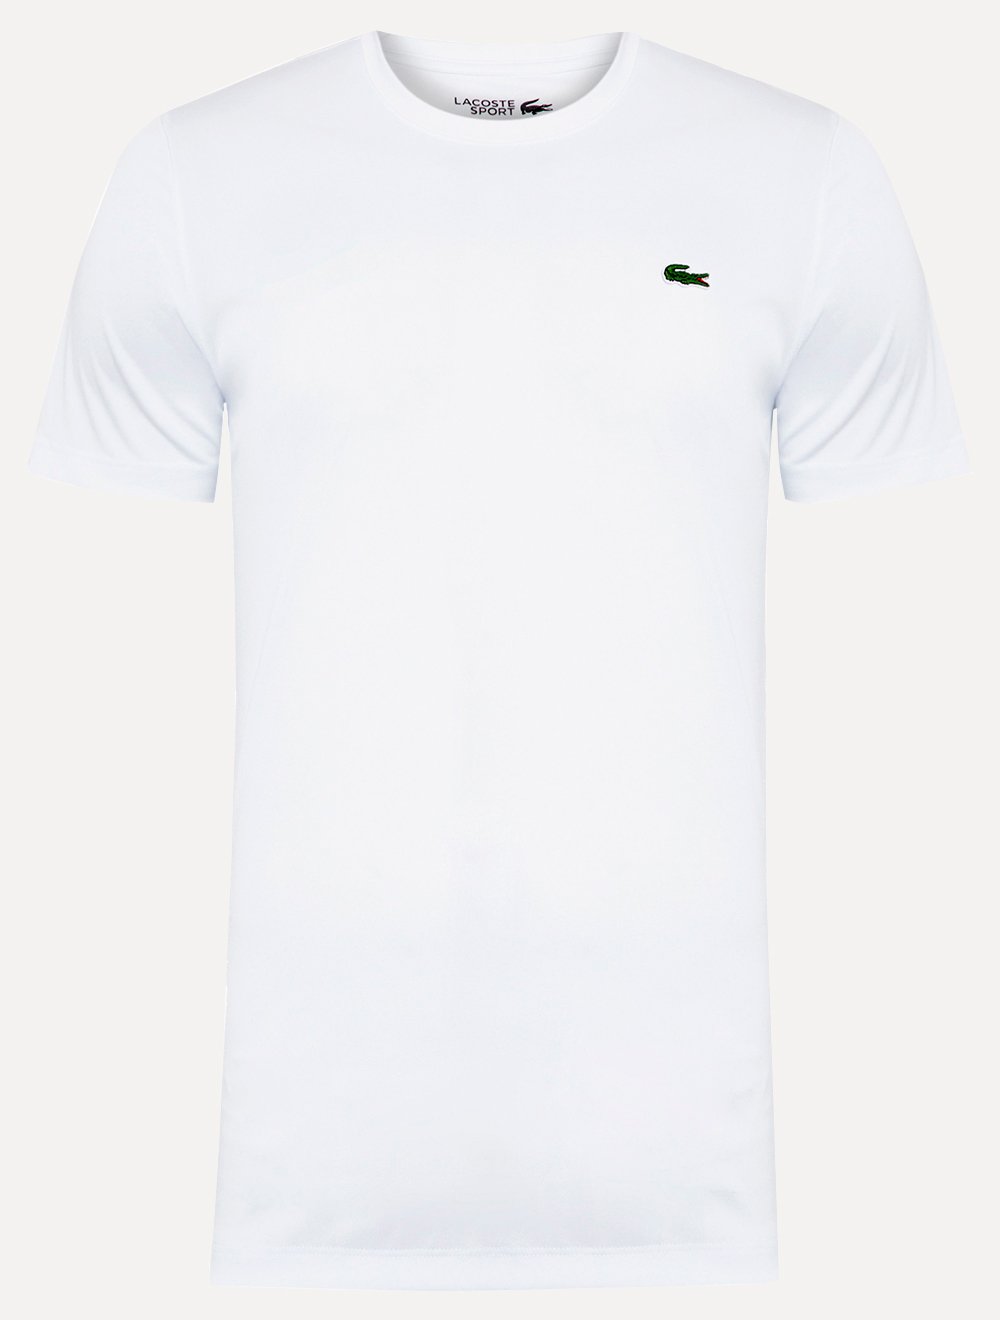 Camiseta Lacoste Masculina Plain Croc Trainning Poliéster Branca